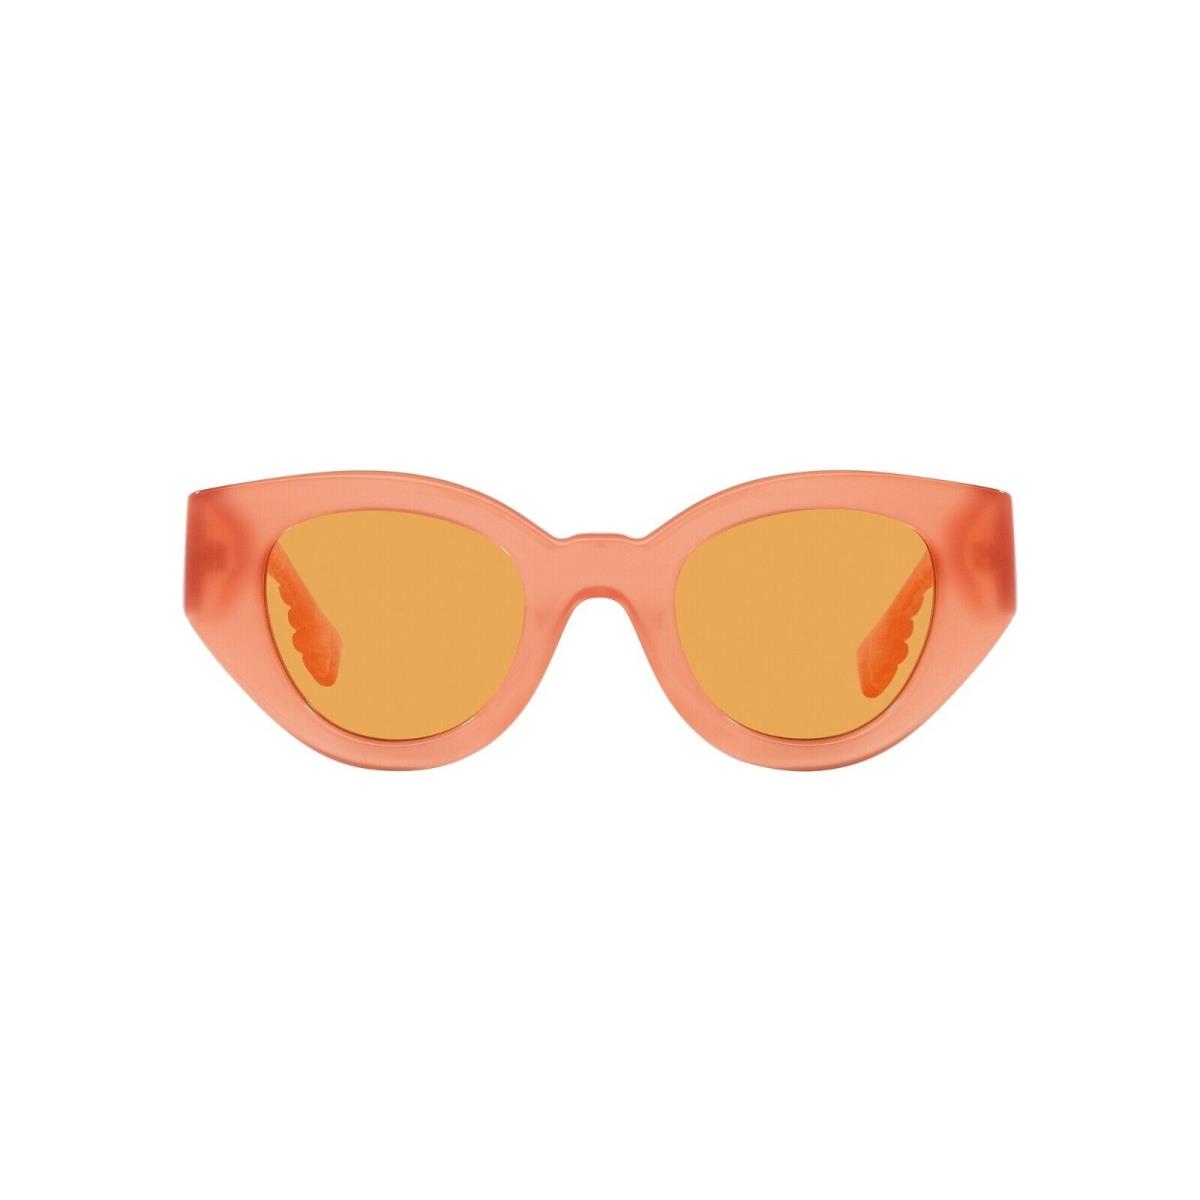 Burberry Meadow BE 4390 Orange/orange 4068/7 Sunglasses - Frame: Orange, Lens: Orange